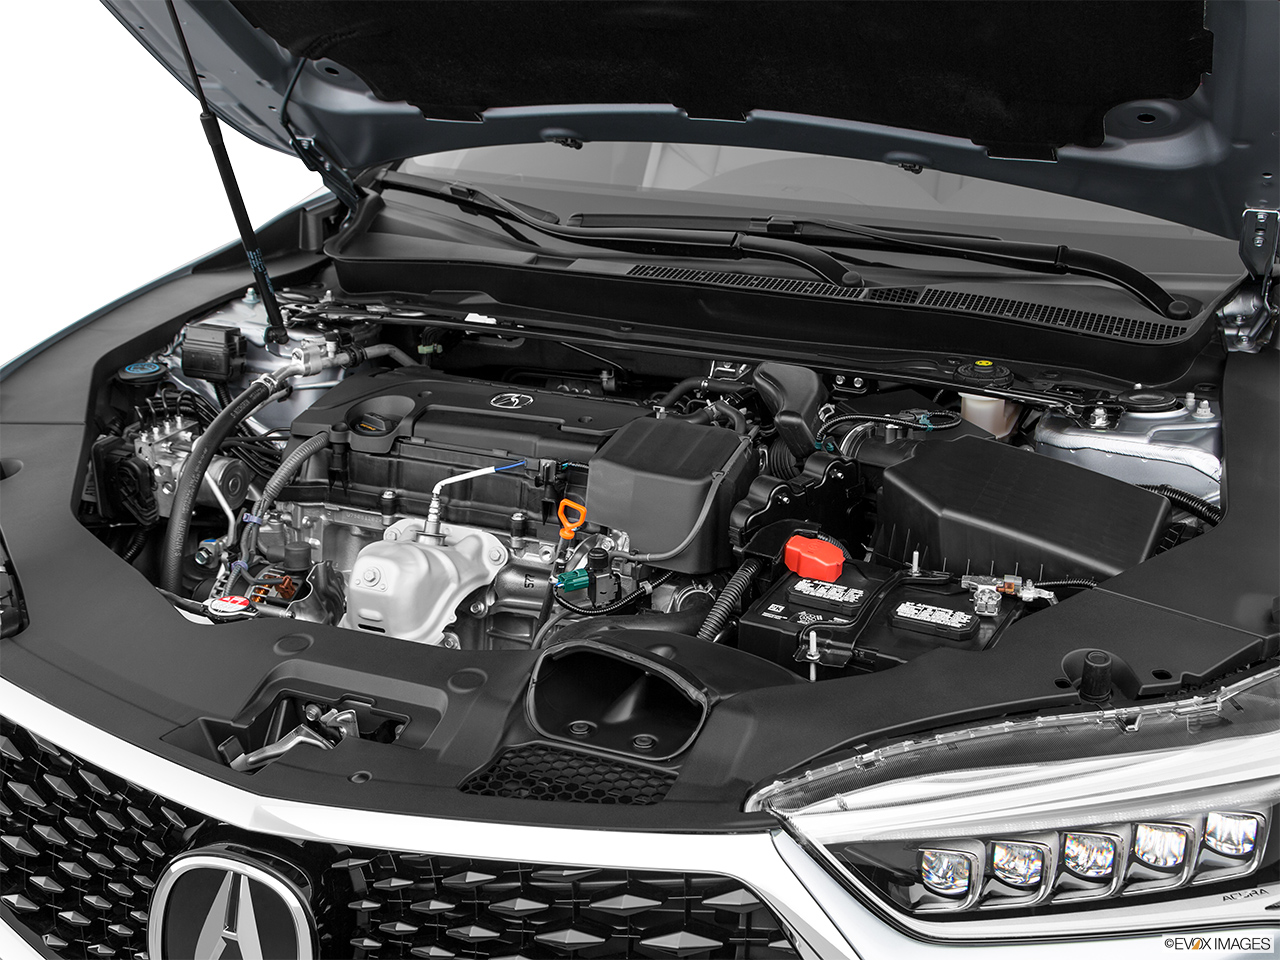 2020 Acura TLX 2.4 8-DCT P-AWS Engine. 